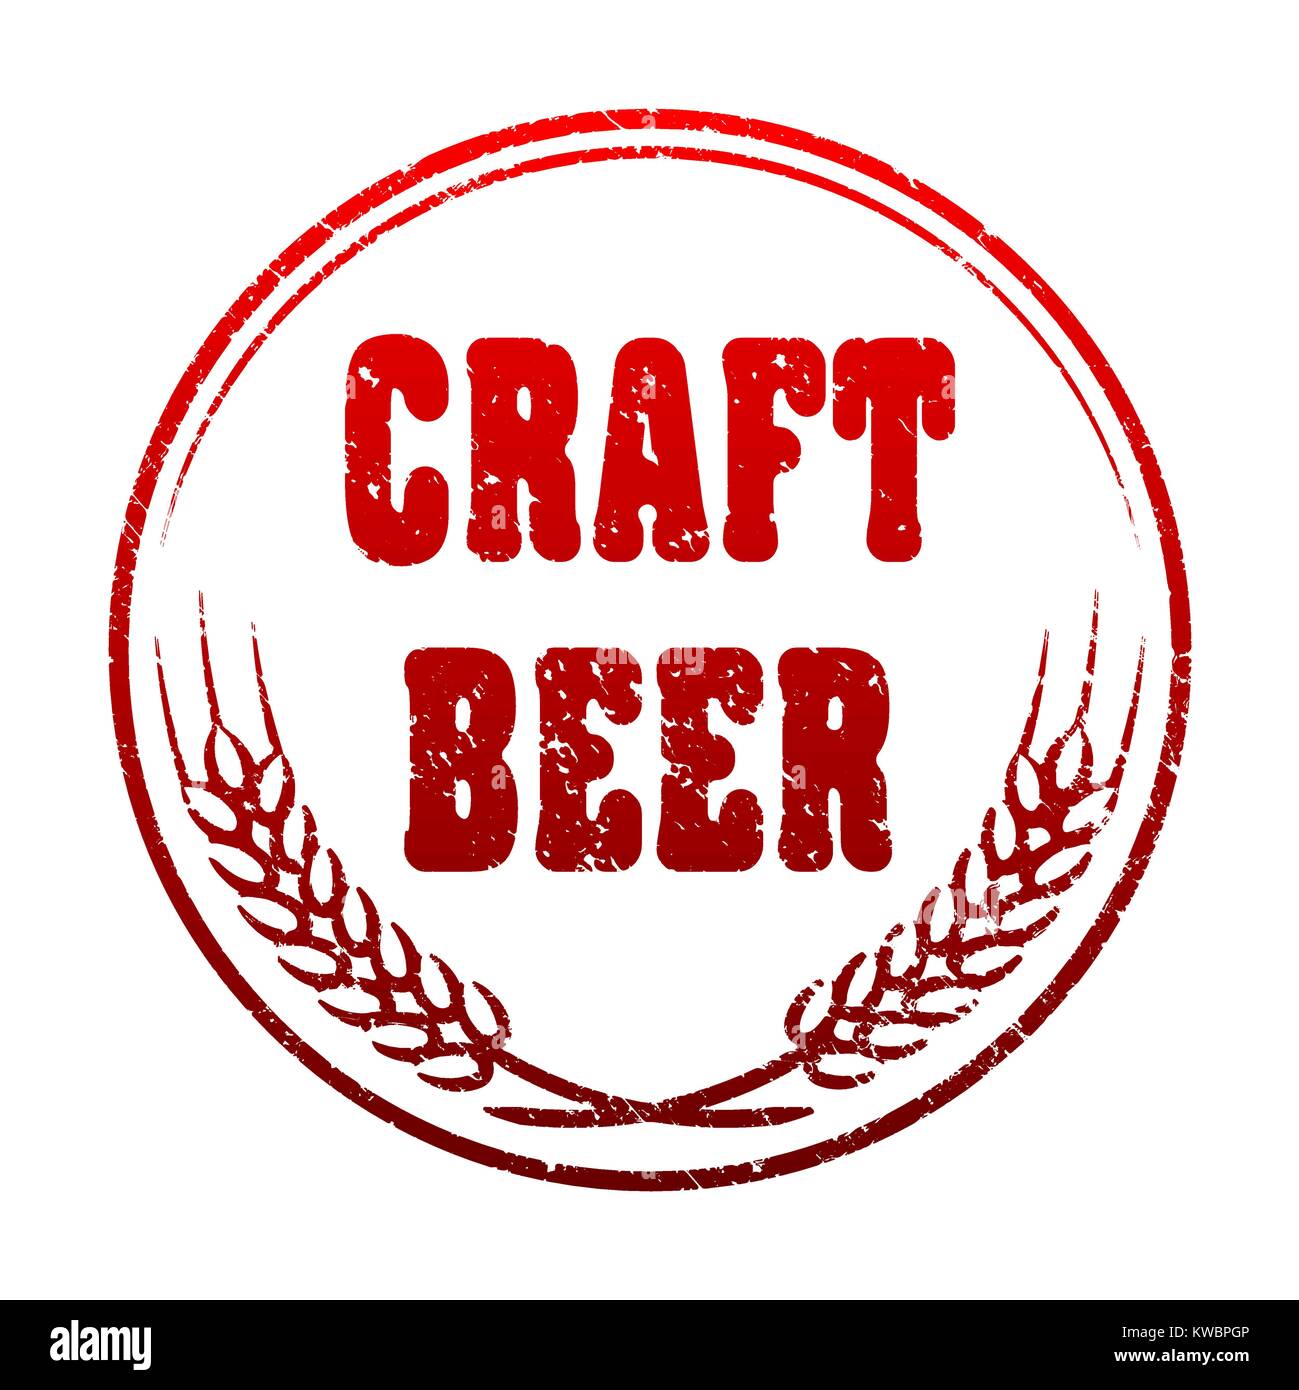 Craft beer emblem with barley ears. Vintage rubber stamp style illustration for your design. Stock Vector